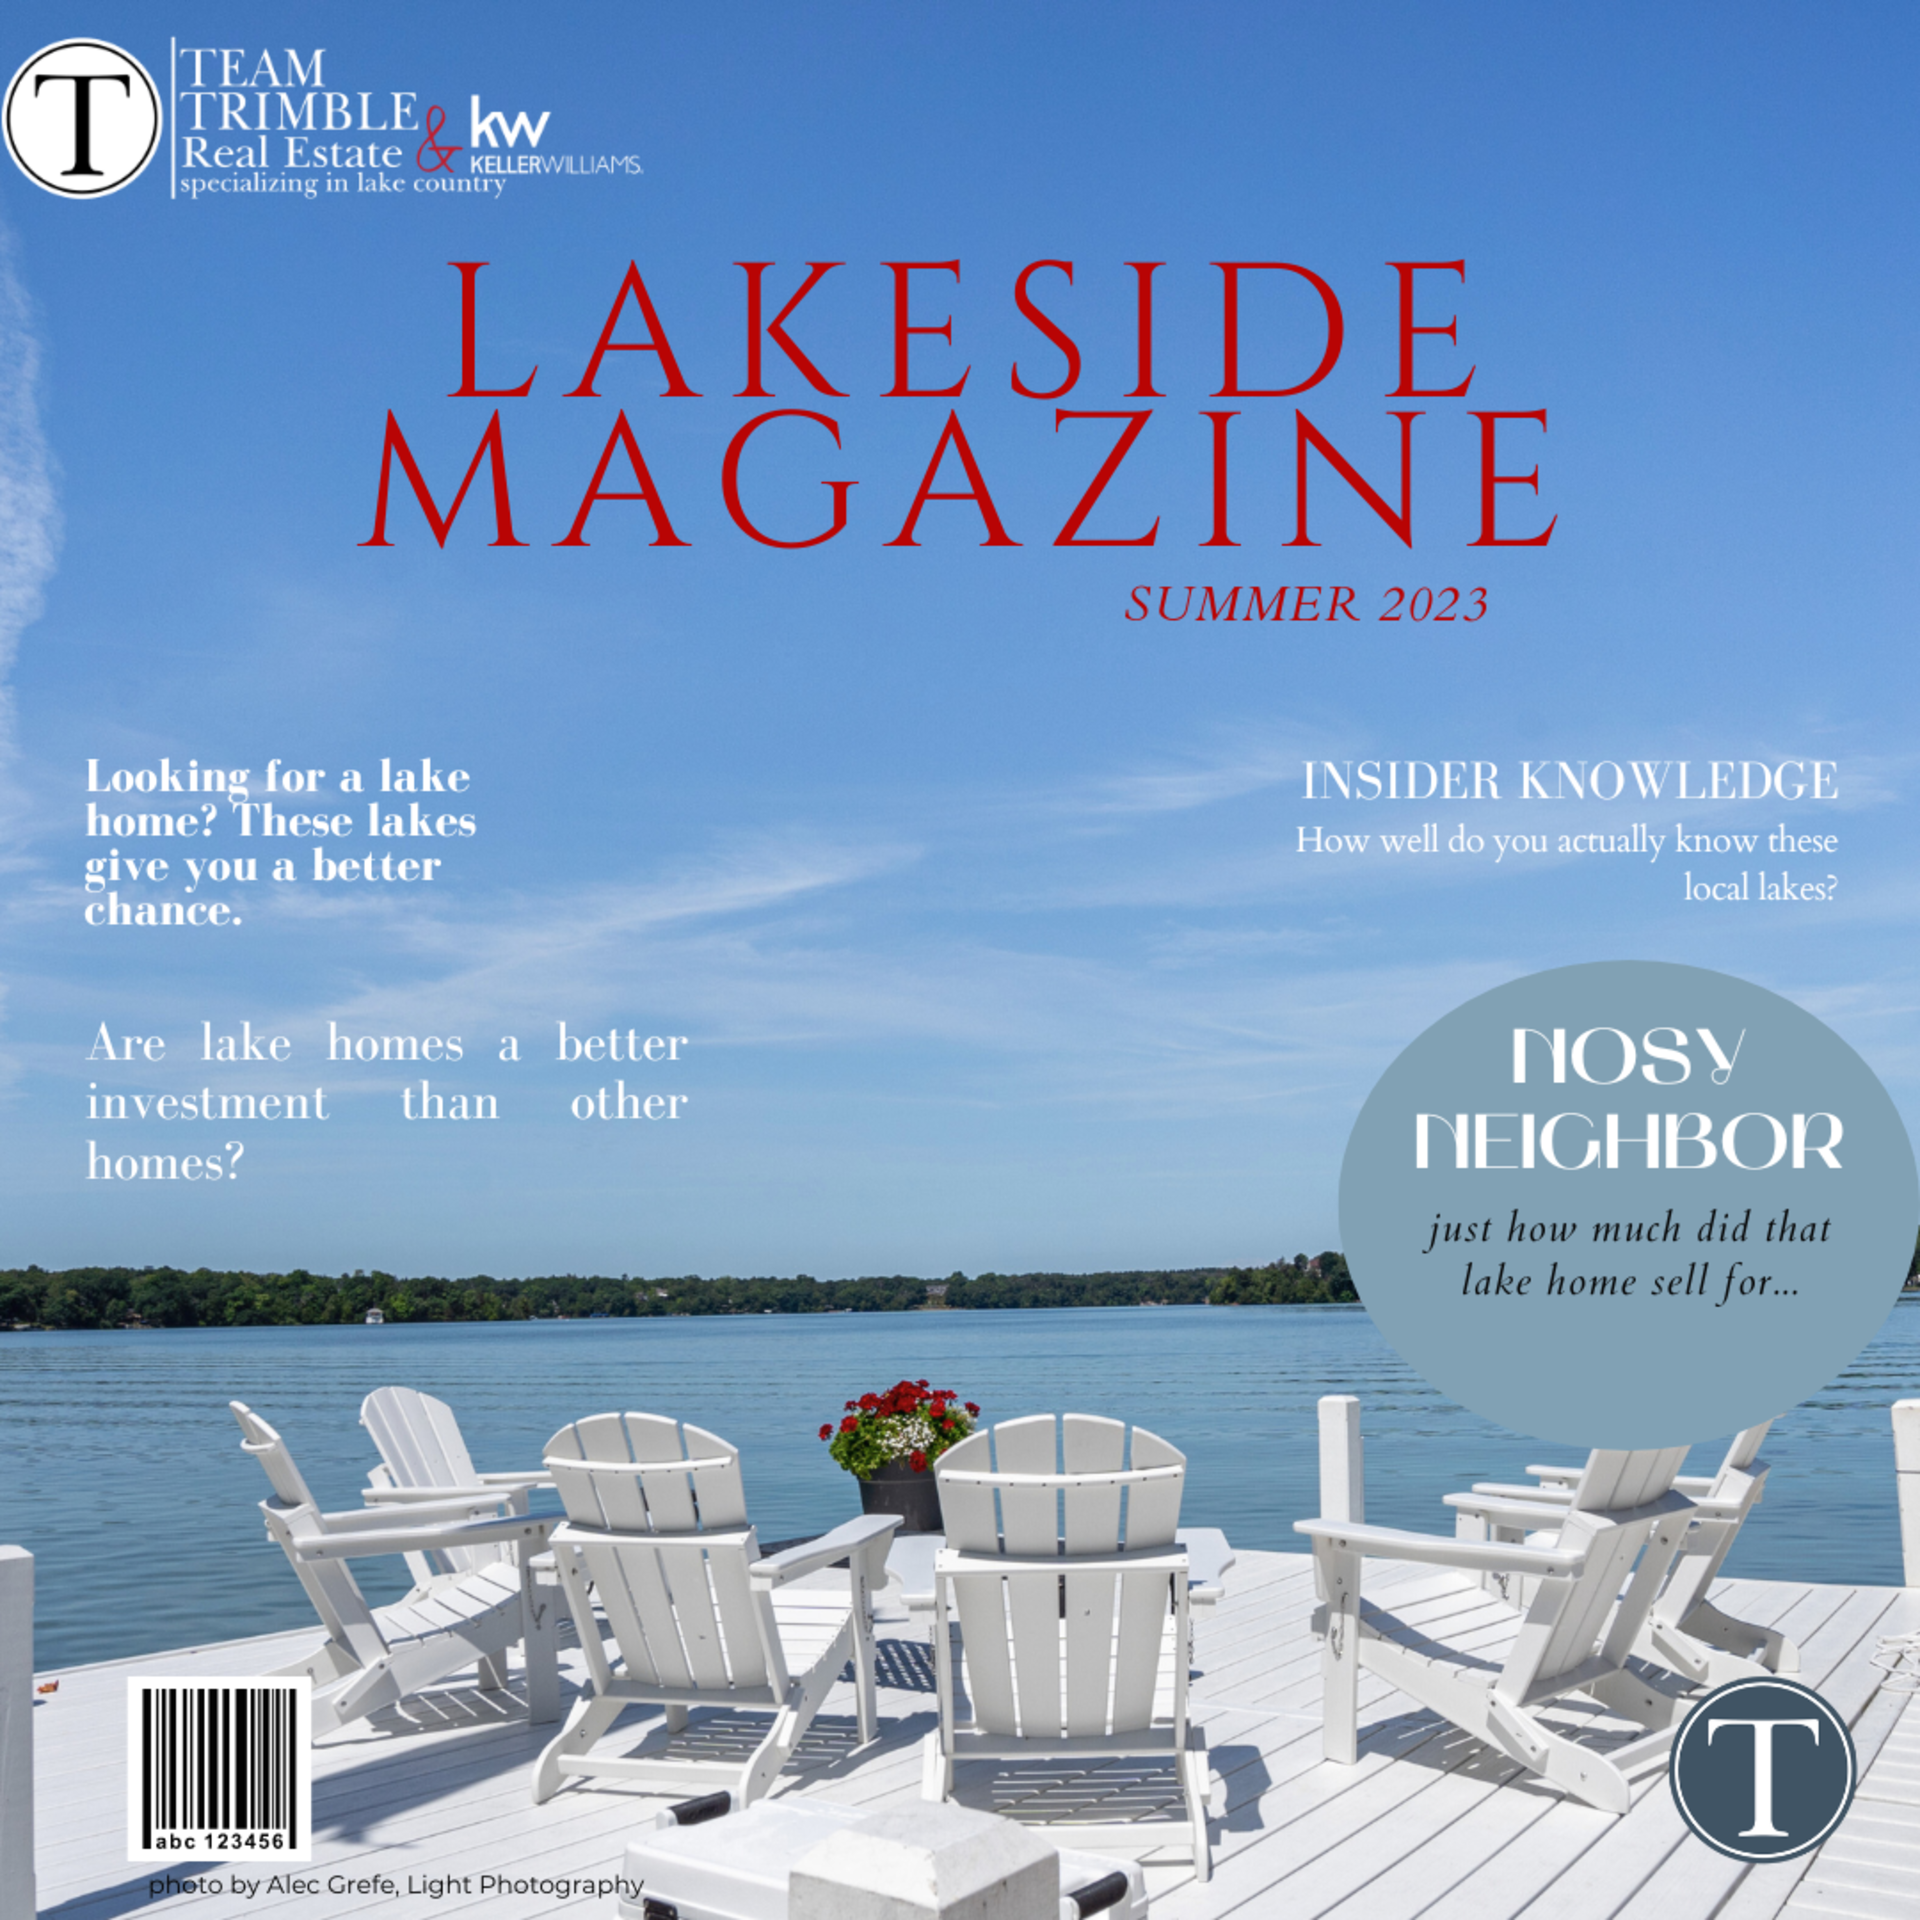 Team Trimble Lakeside Magazine Summer 2023